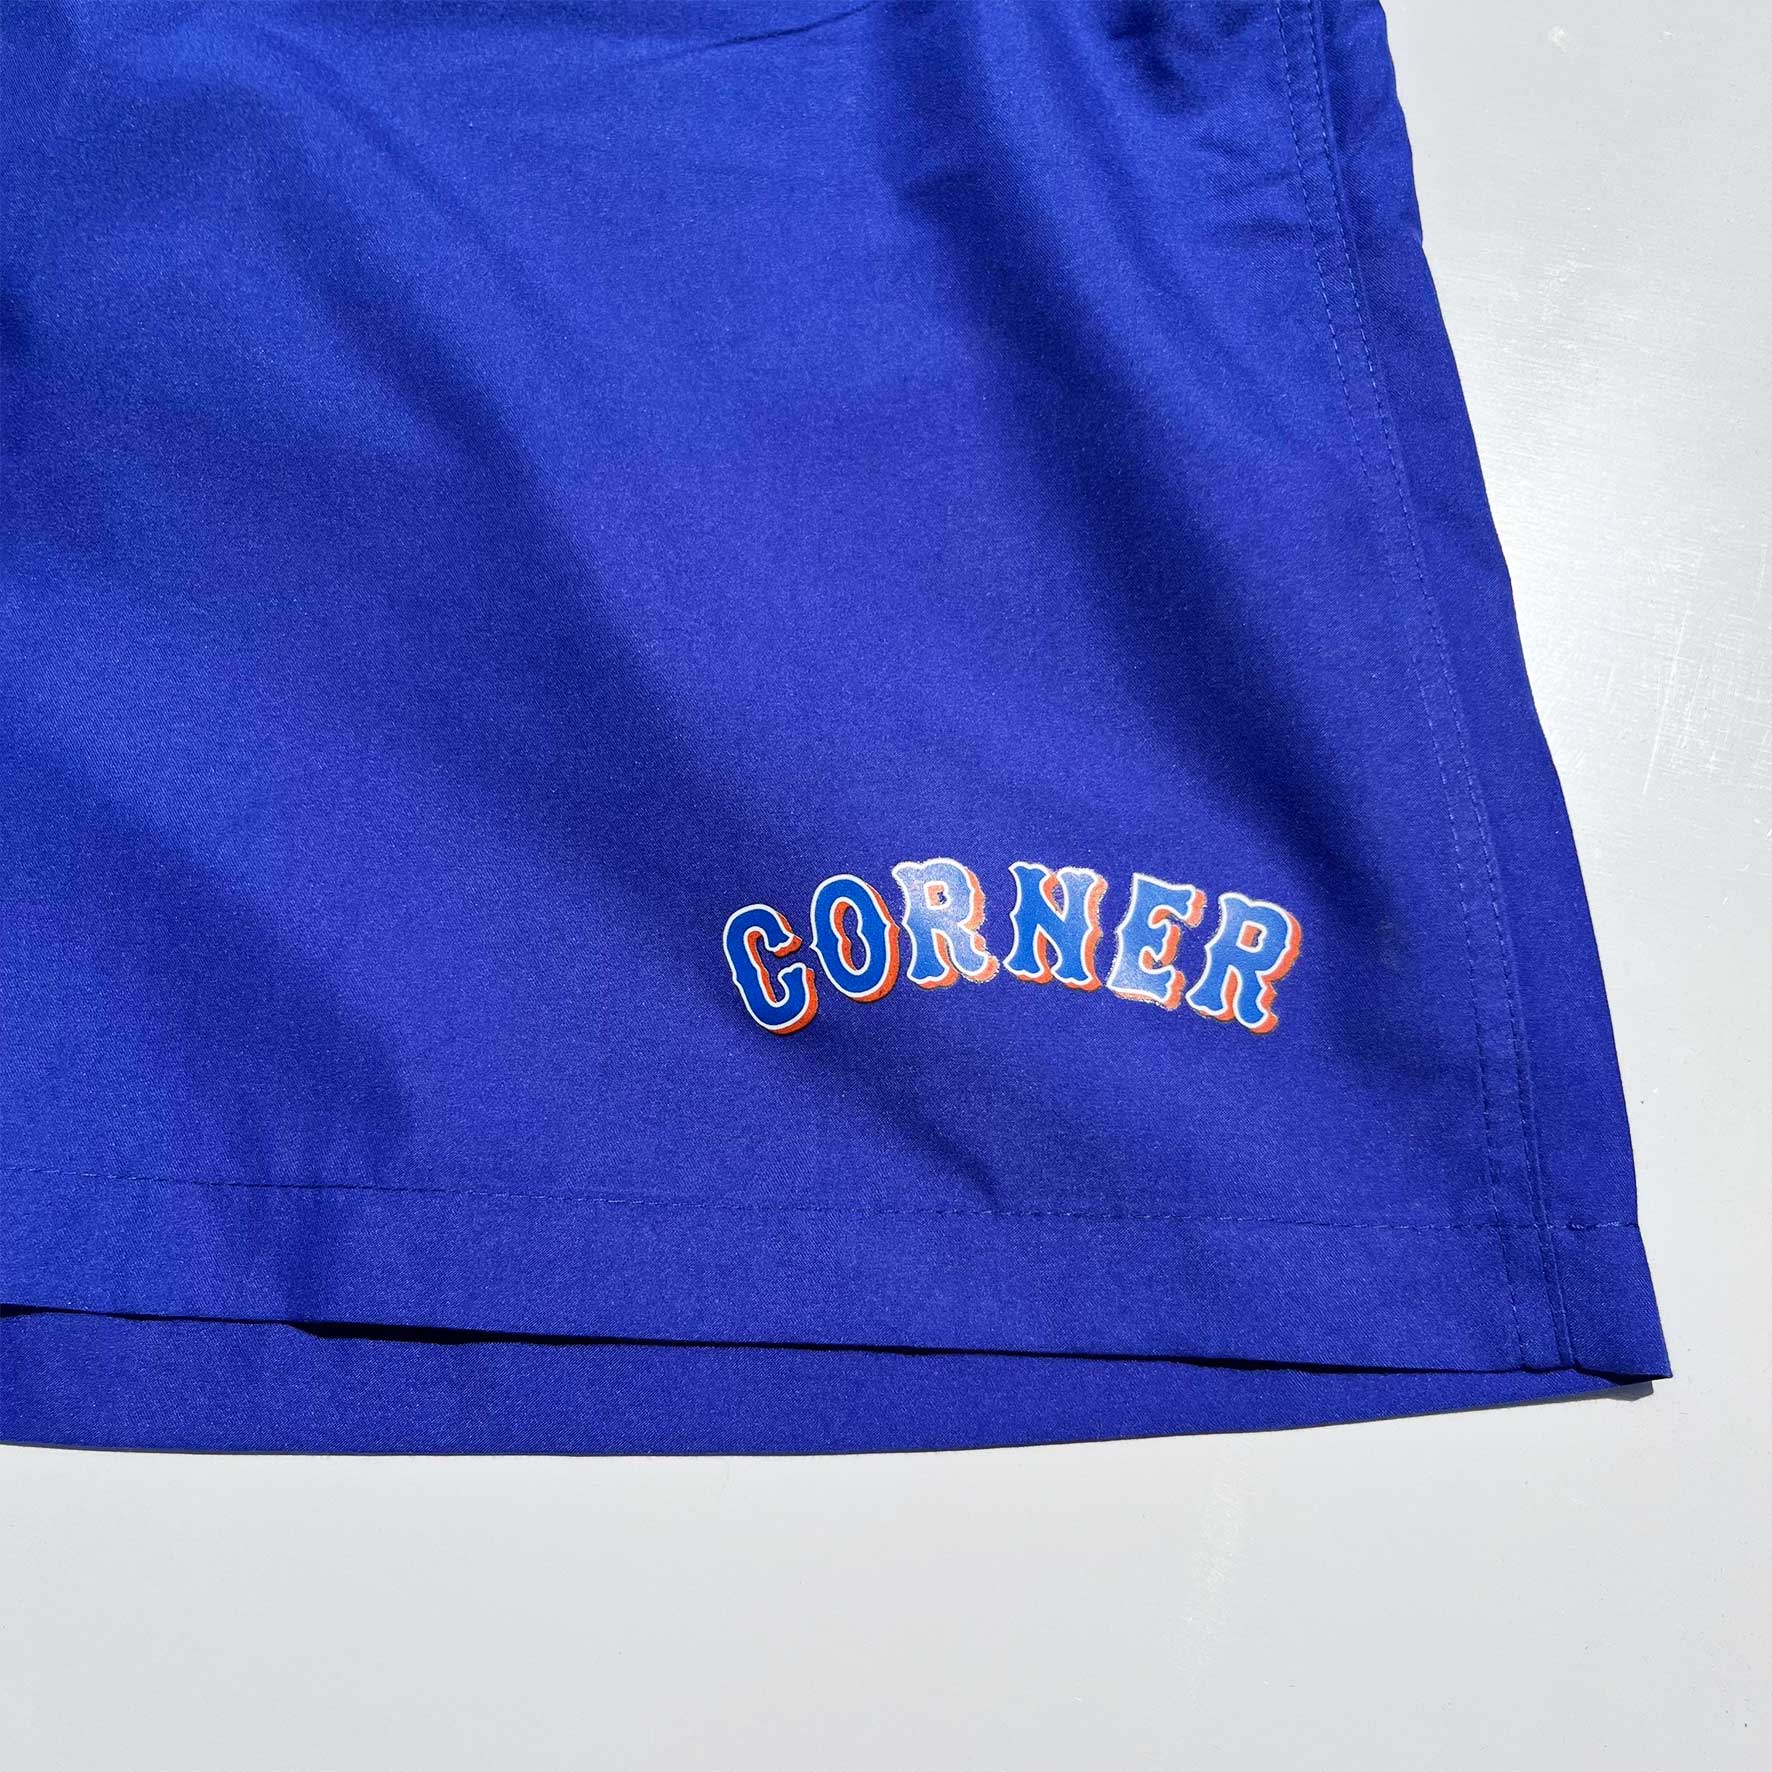 Cobra Caps コブラ キャップス Microfiber All Purpose Shorts (品番AS2-SHORTS)